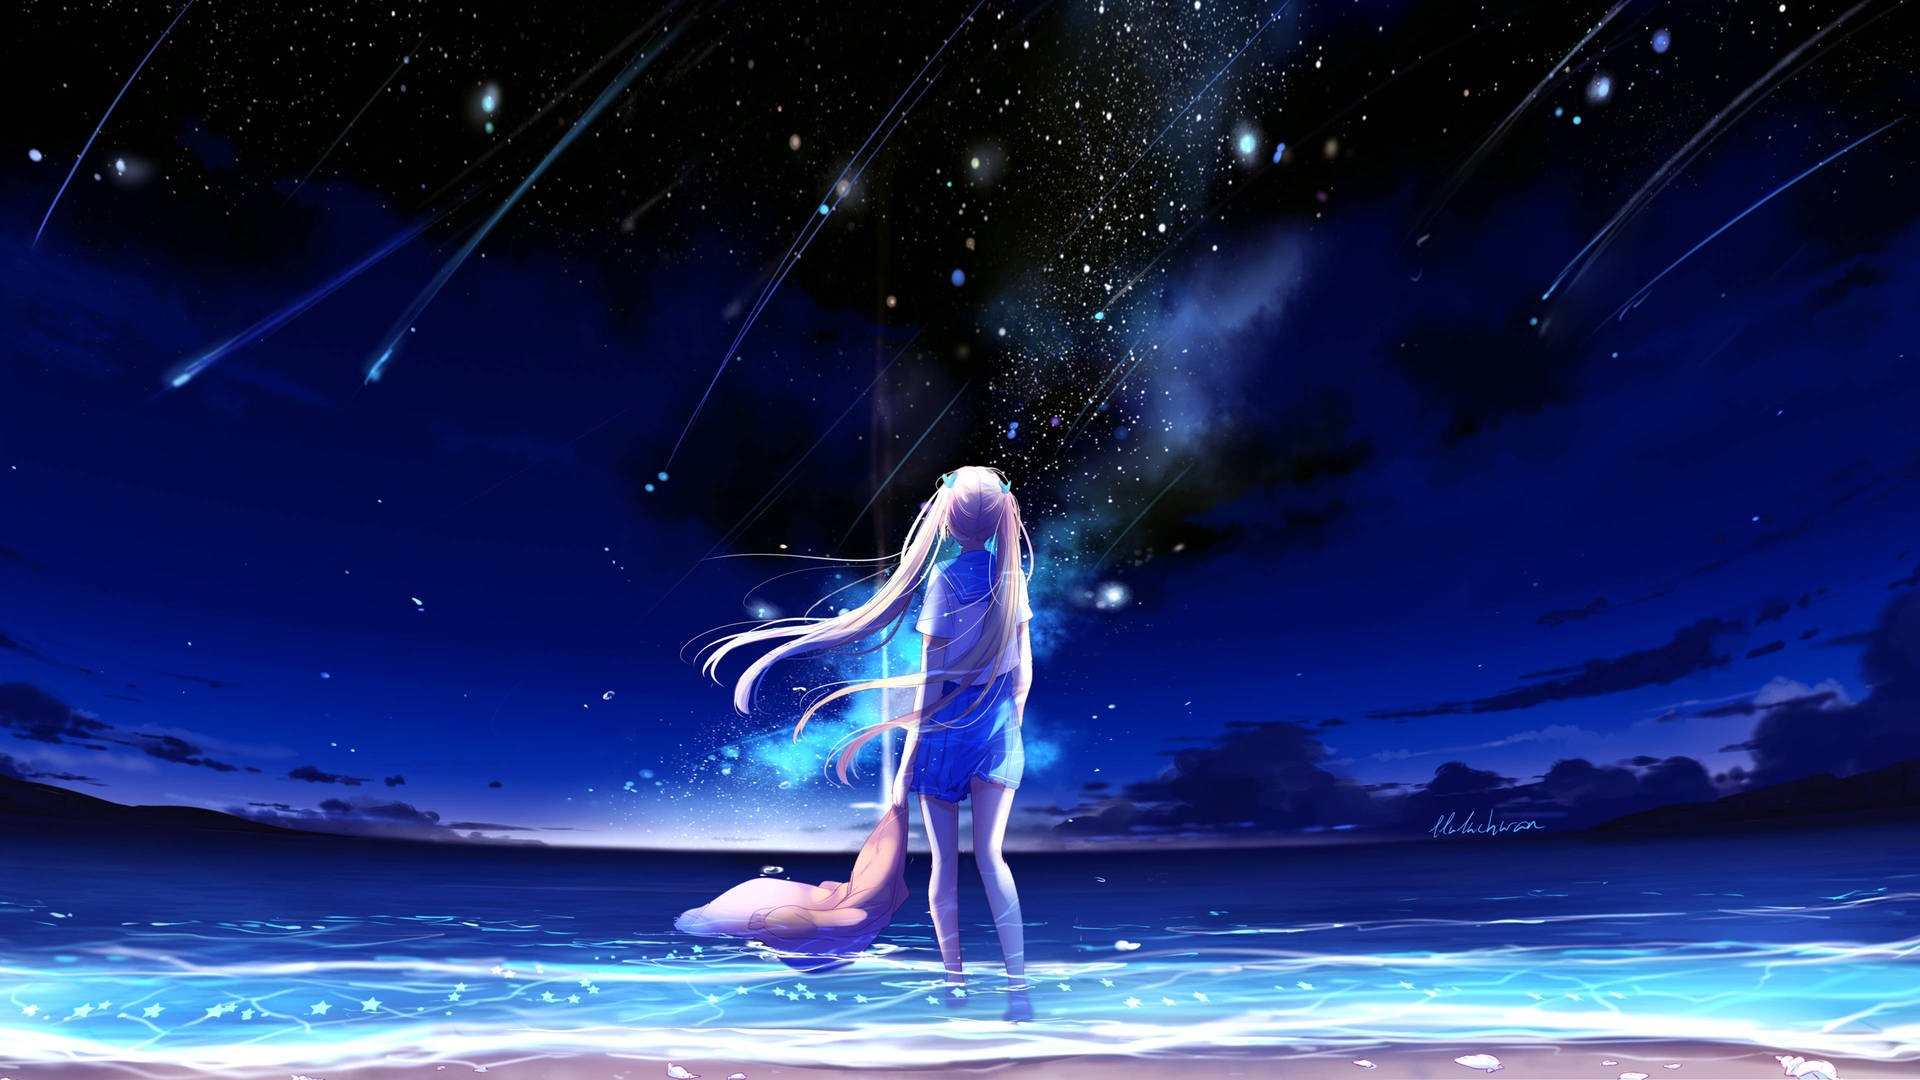 Animation Anime Girl Shooting Stars At Beach